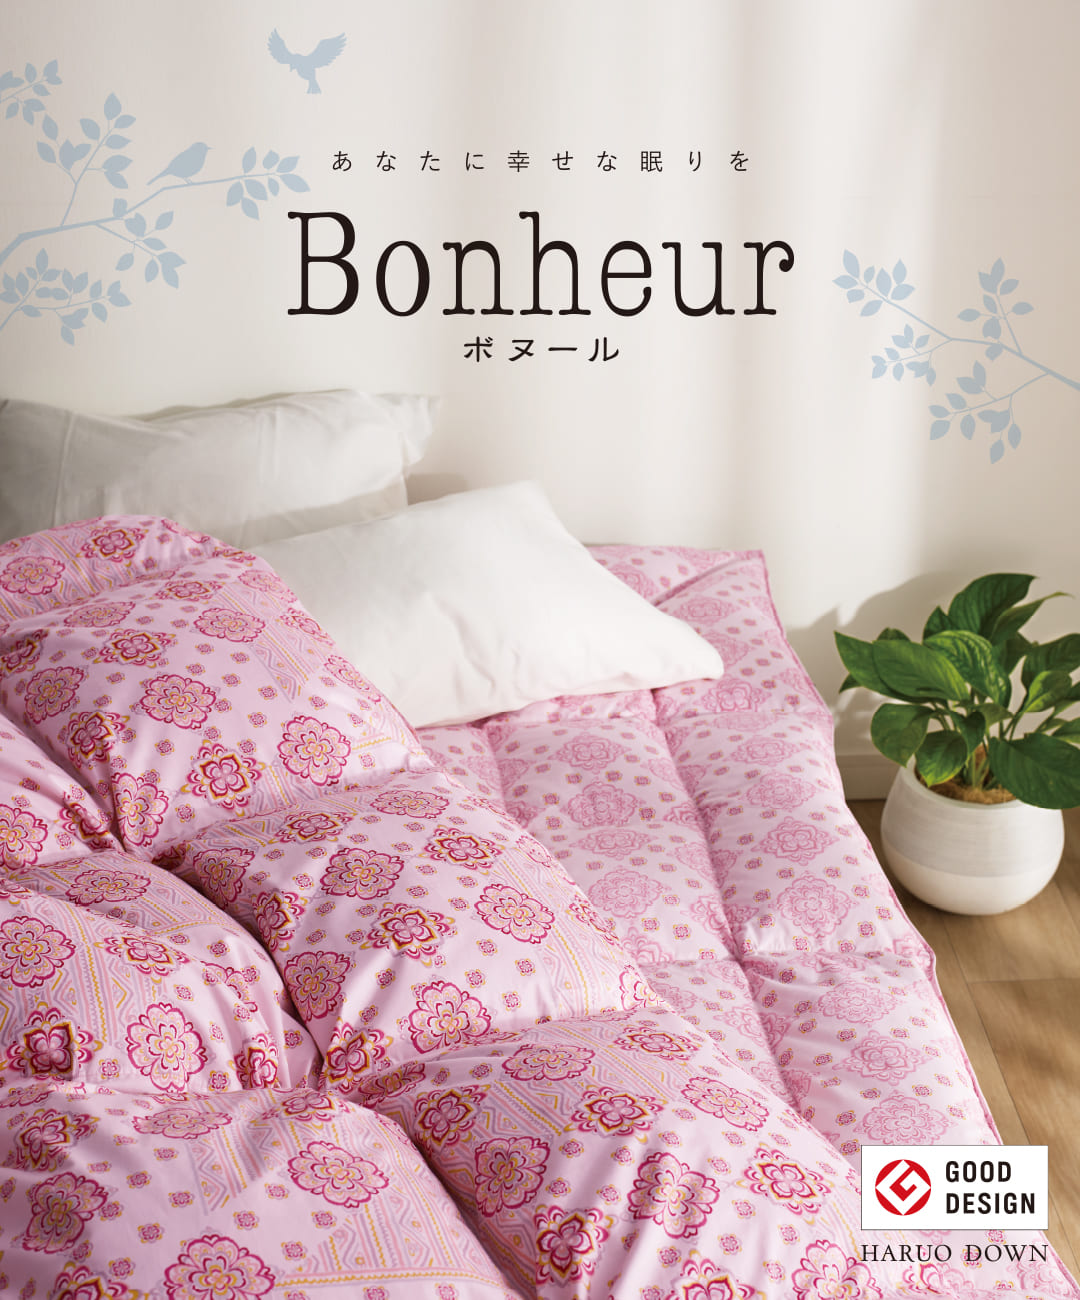 Bonheur - ボヌール羽毛掛け布団シリーズ -